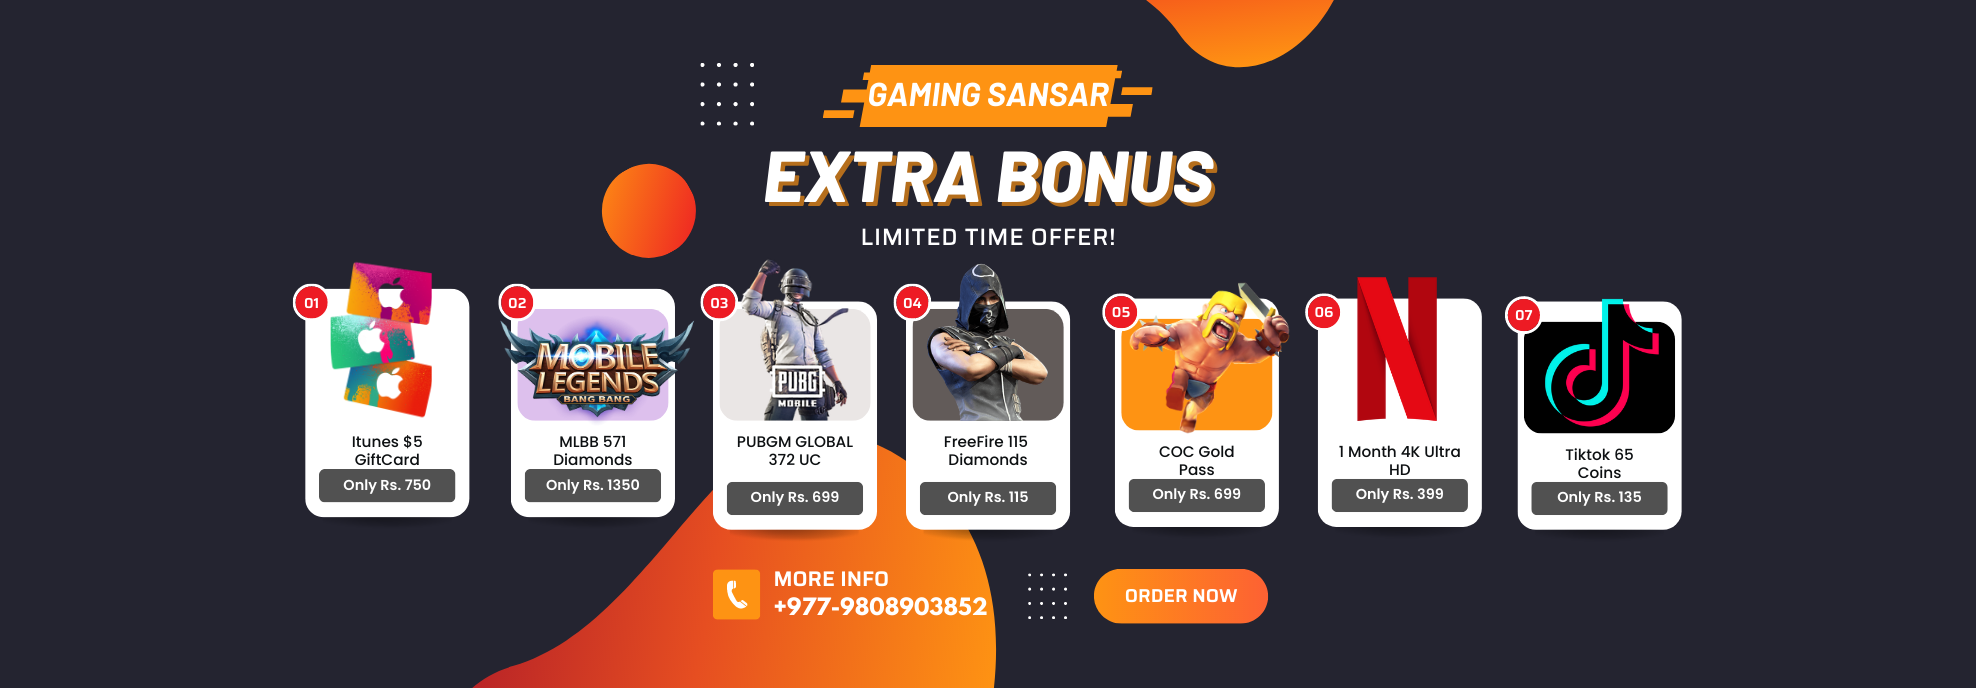 Get Extra Bonus on each purchase from Gaming Sansar!